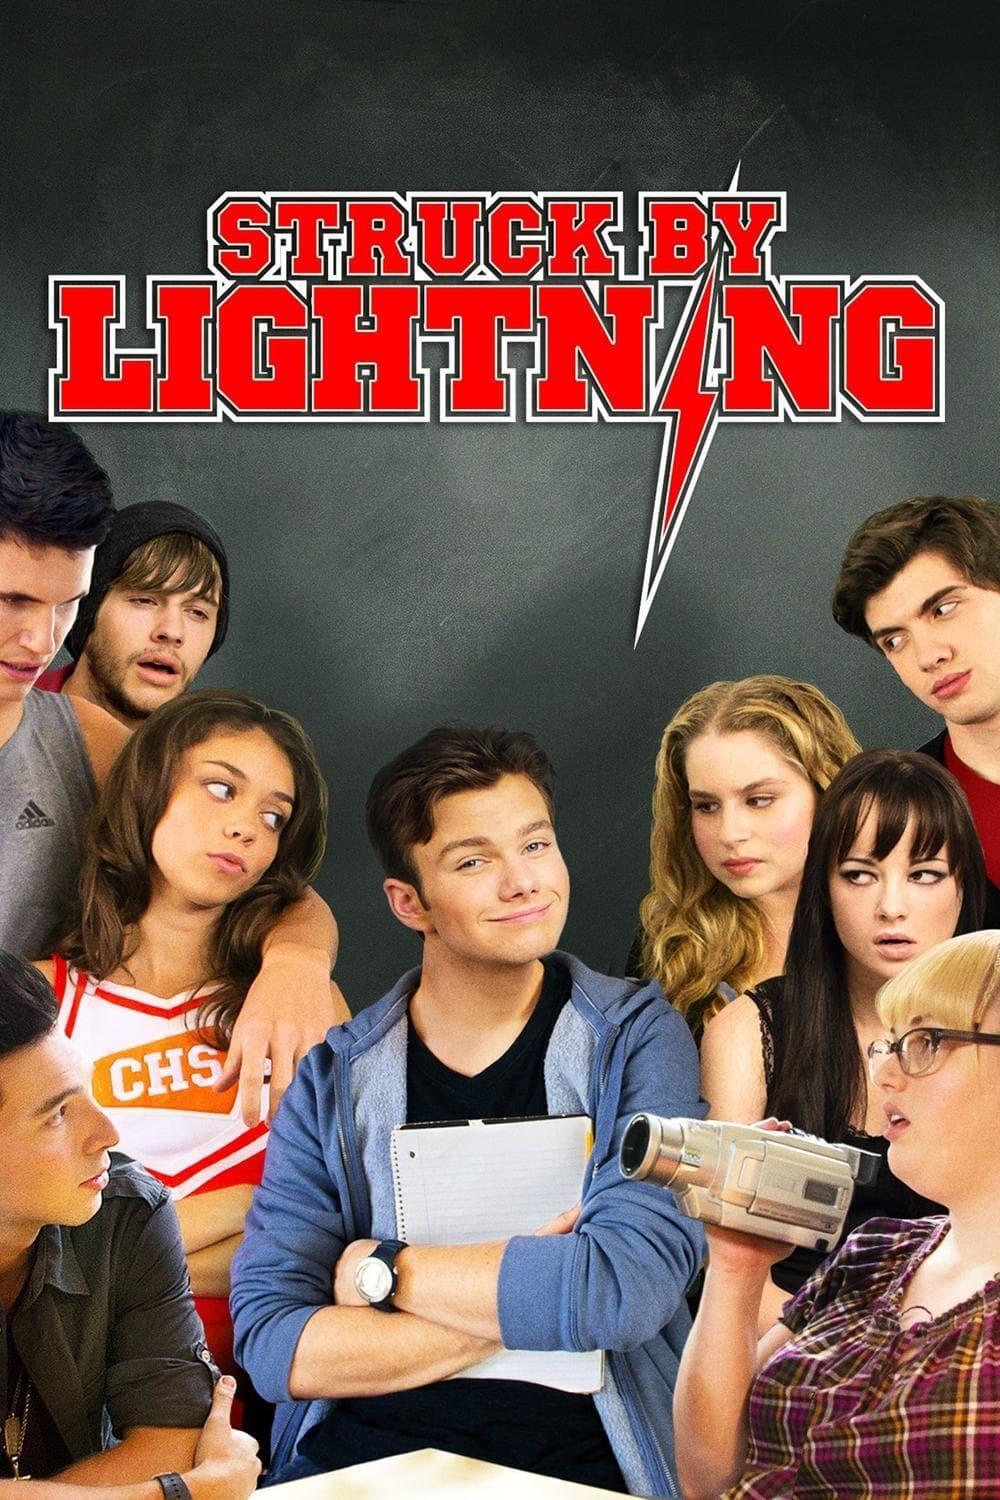 Struck by Lightning poster